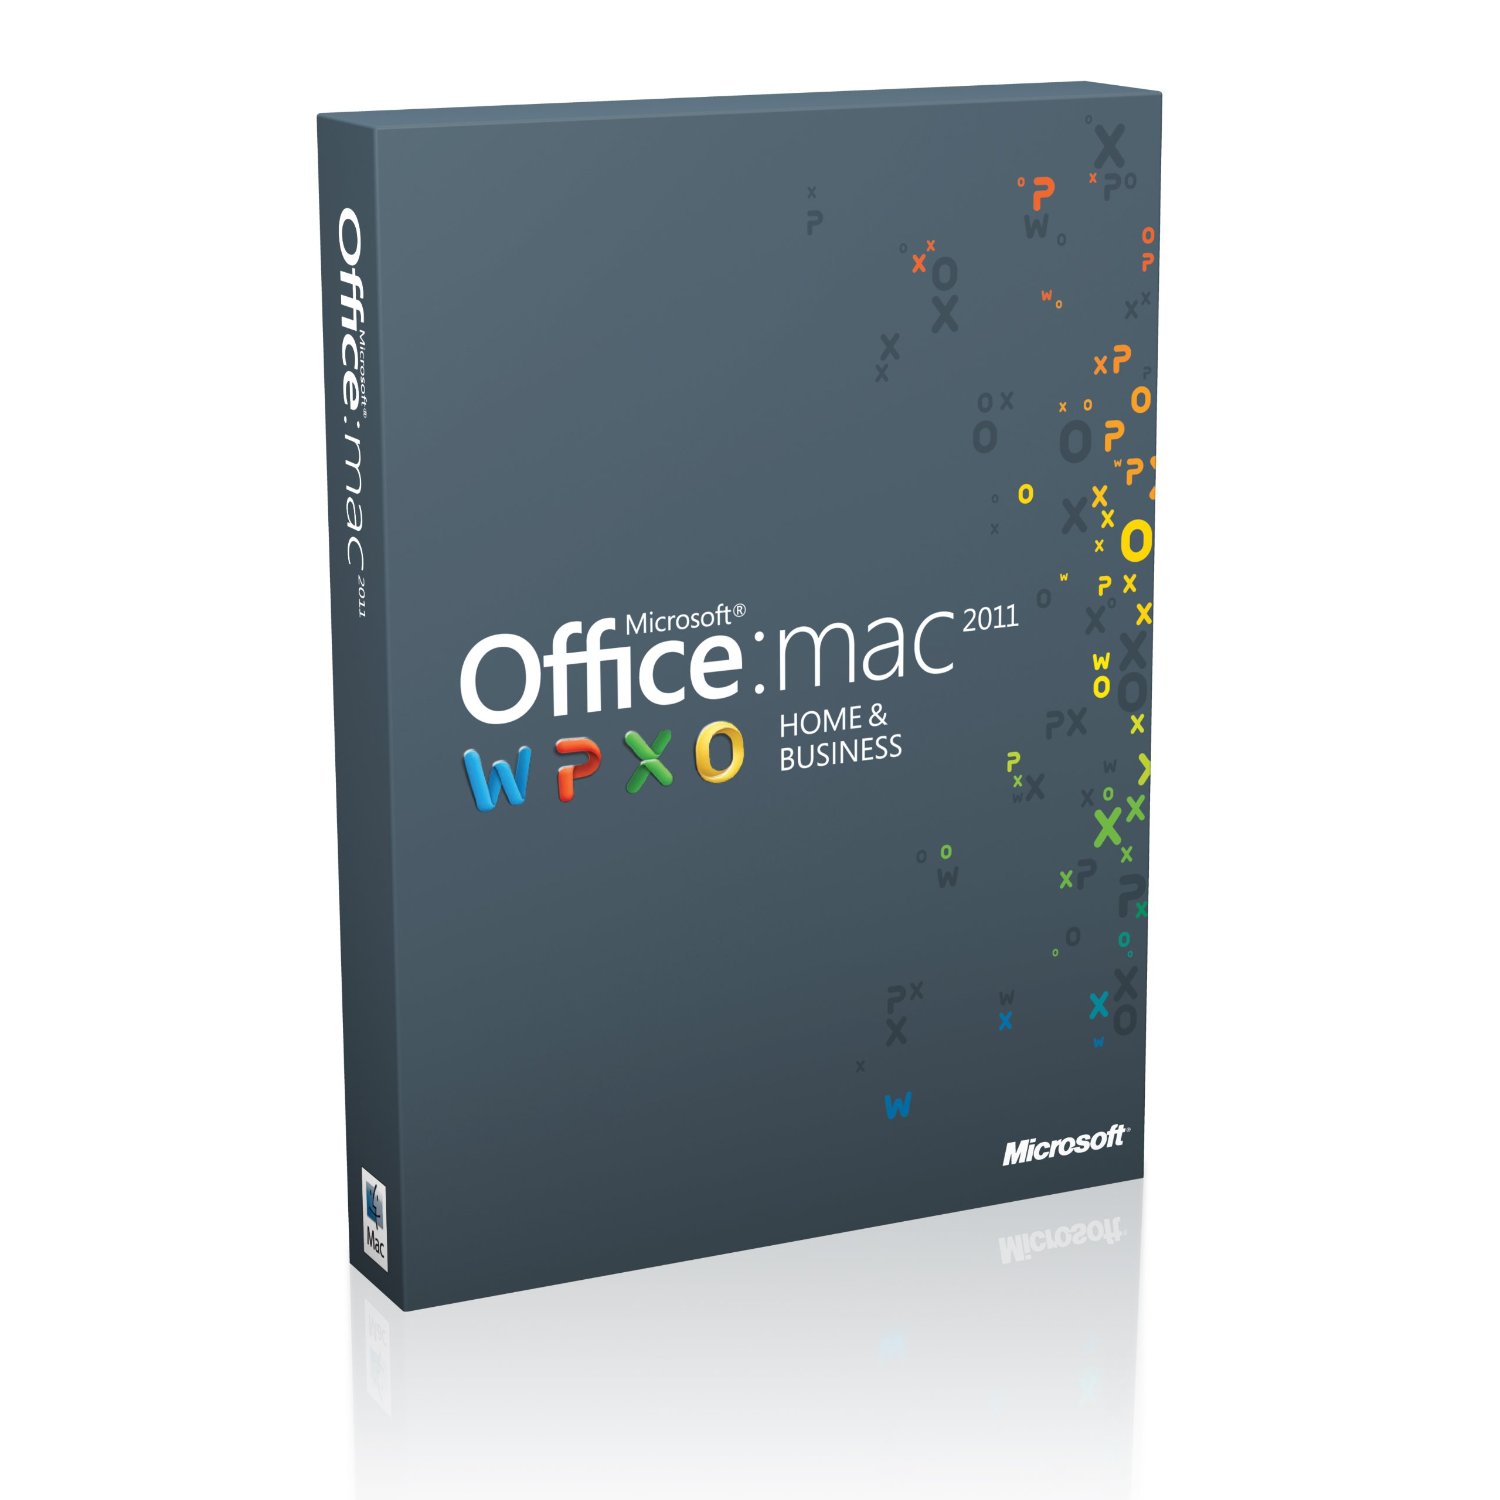 Office 2011 Download Mac Trial